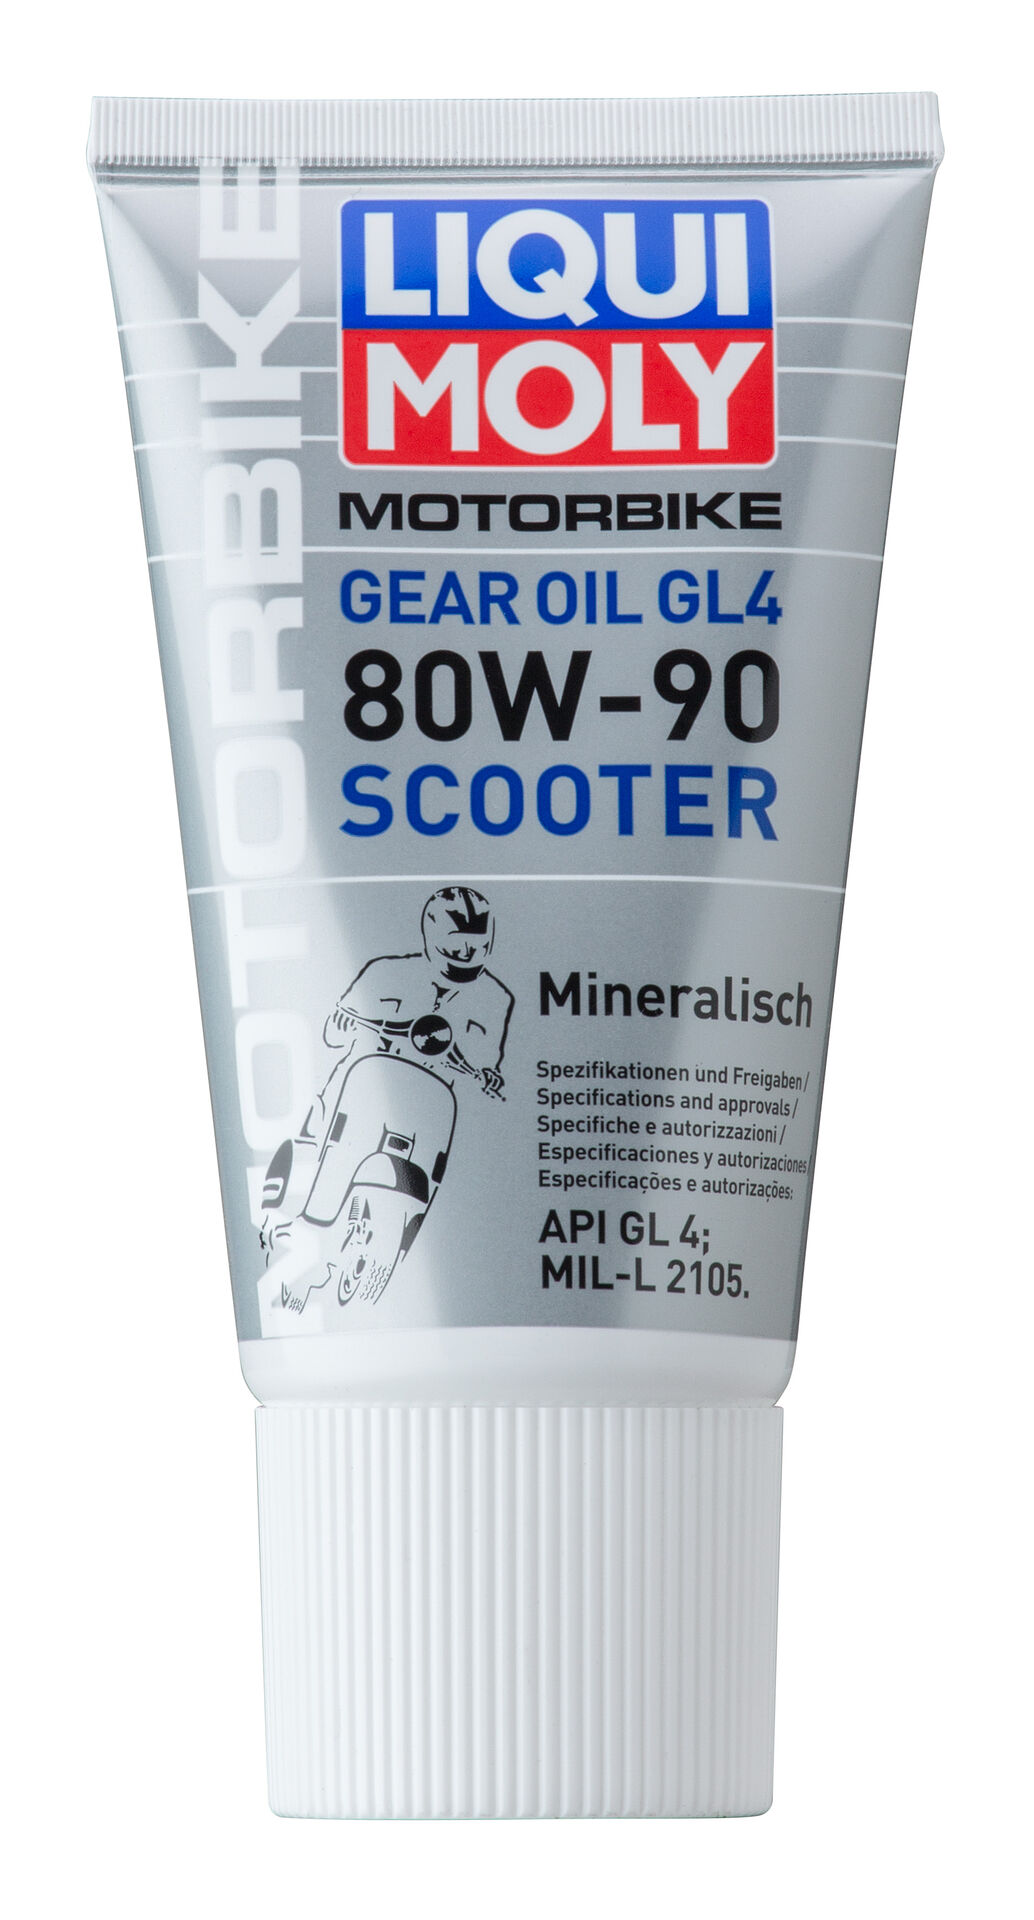 Liqui Moly Motorbike Gear Oil GL4 80W-90 Scooter Getriebeöl 150 ml